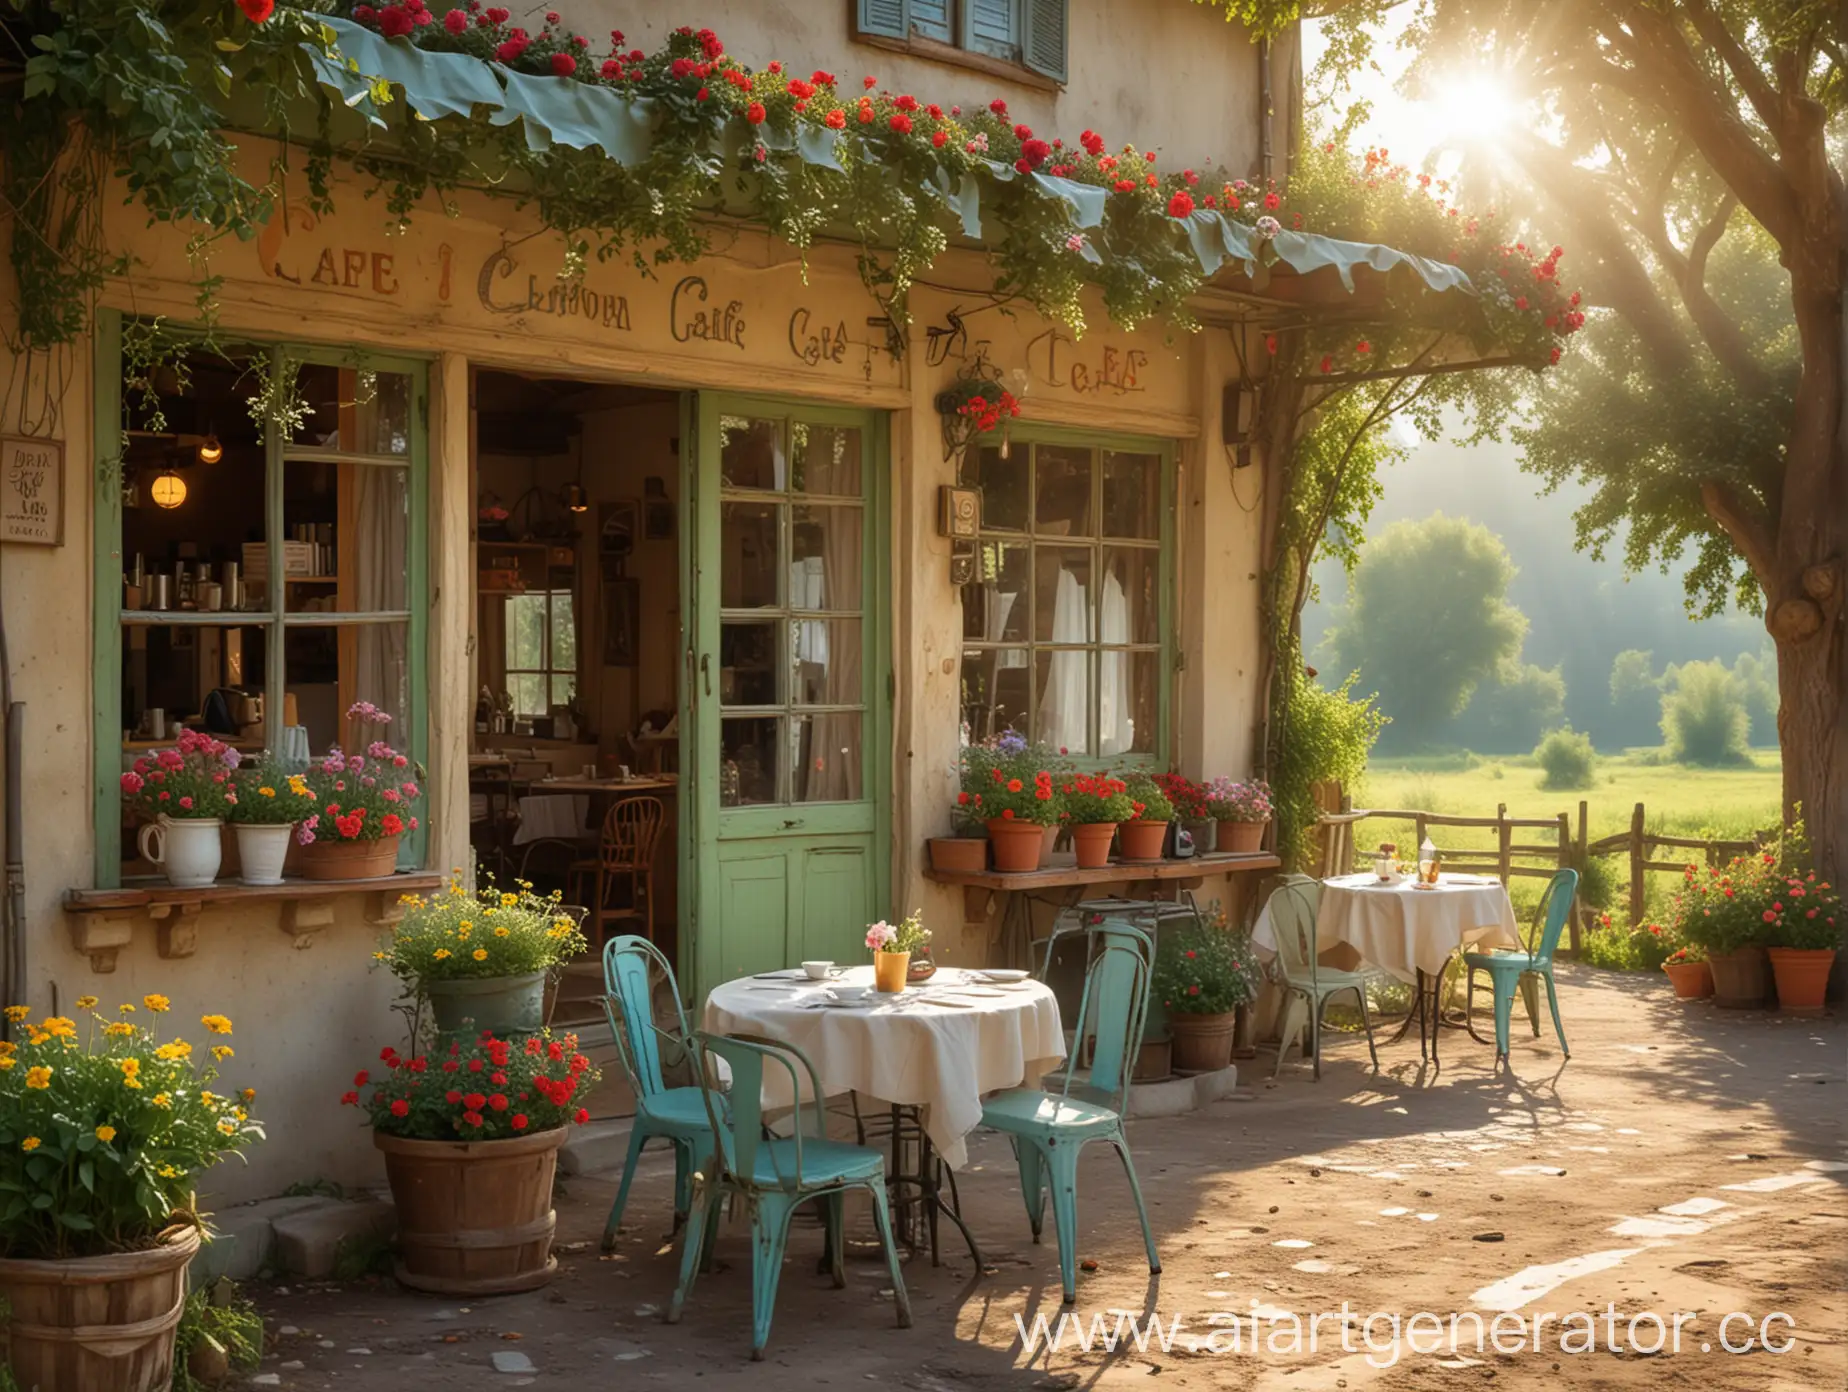 Magical-Country-Cafe-A-Joyful-Morning-Gathering